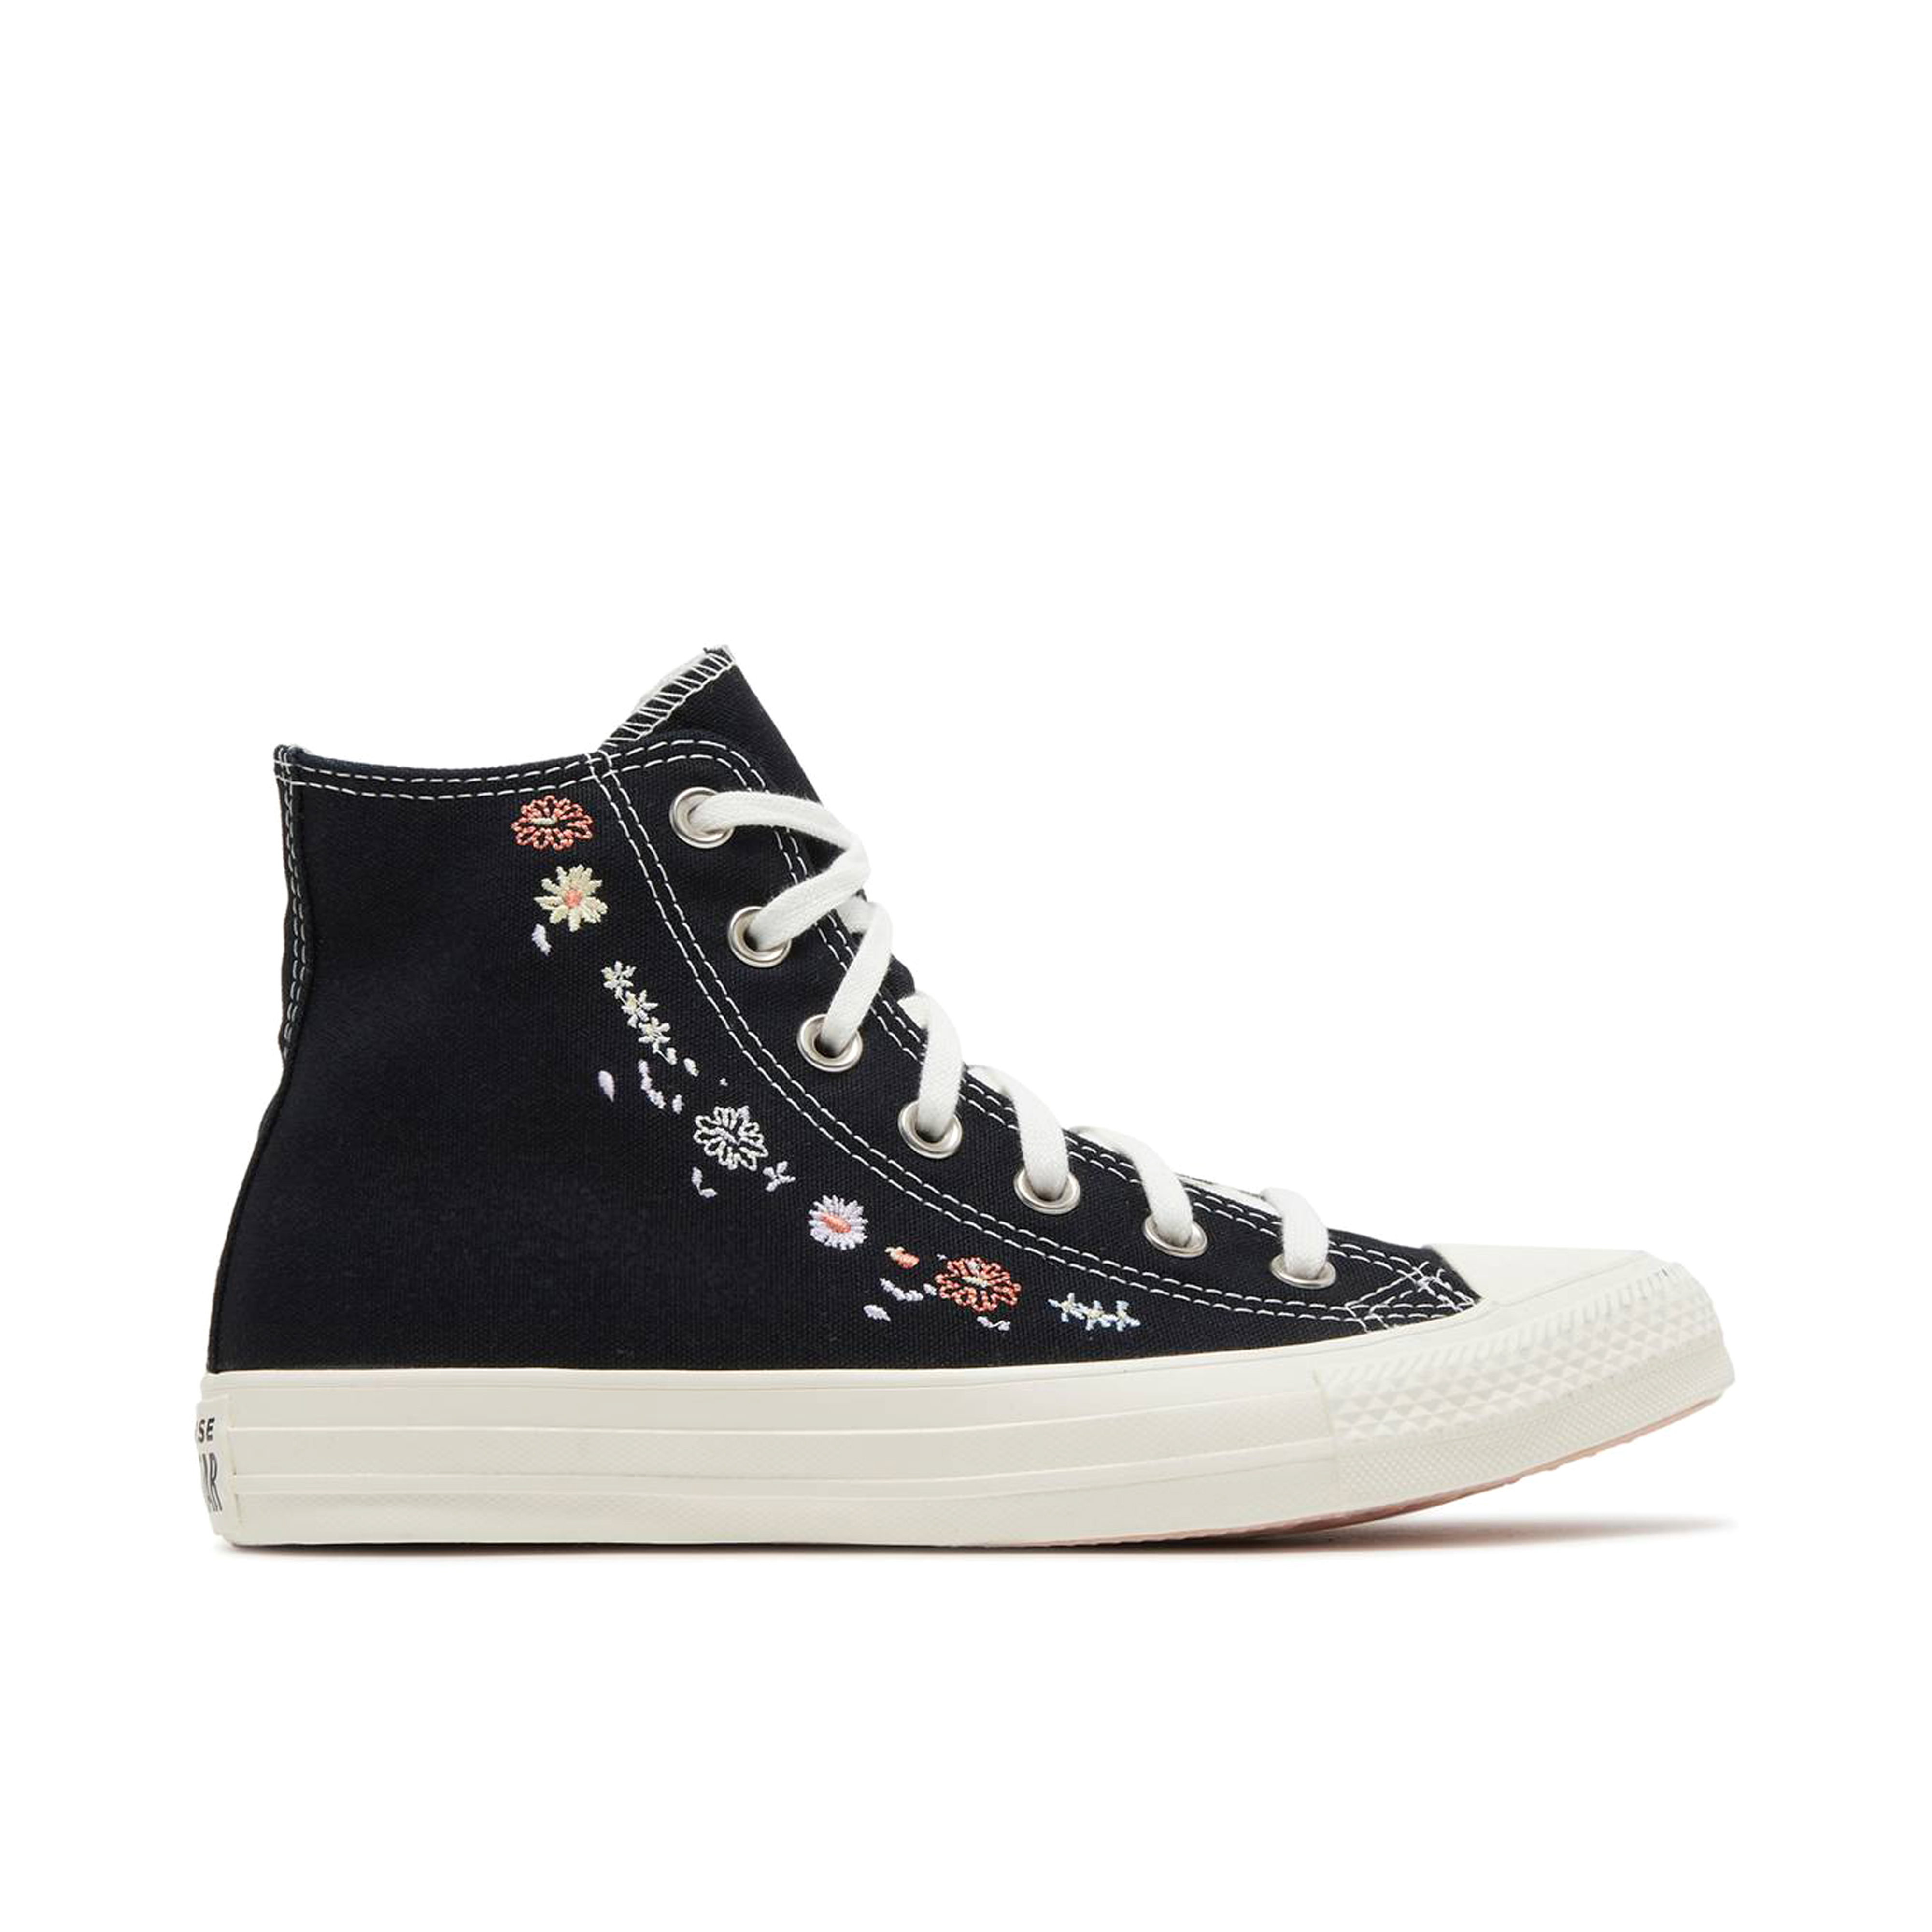 Buy Original Converse Sneakers online | Lazada.com.ph